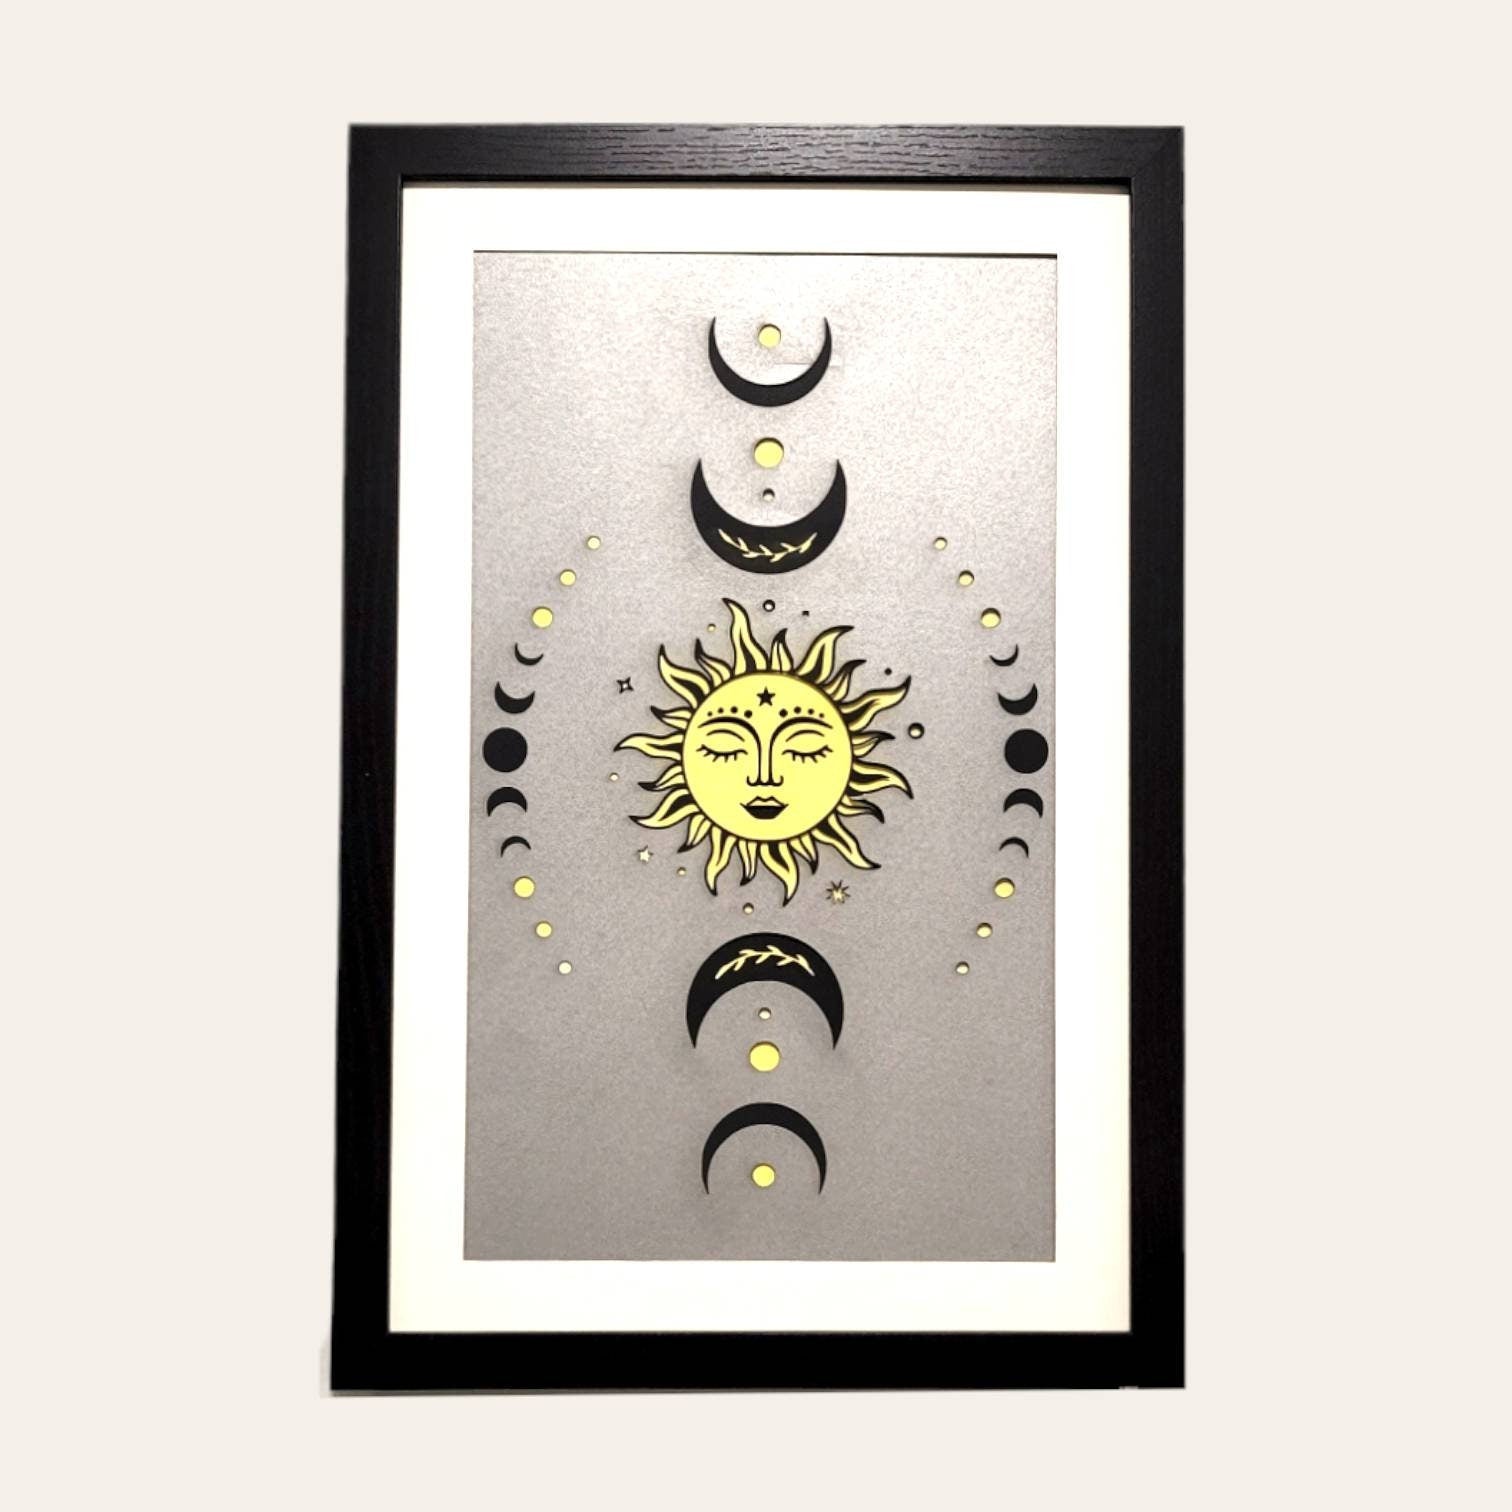 Framed Personalized Framed Celestial Wall Art | Jones Laser Craft Personalized Gift